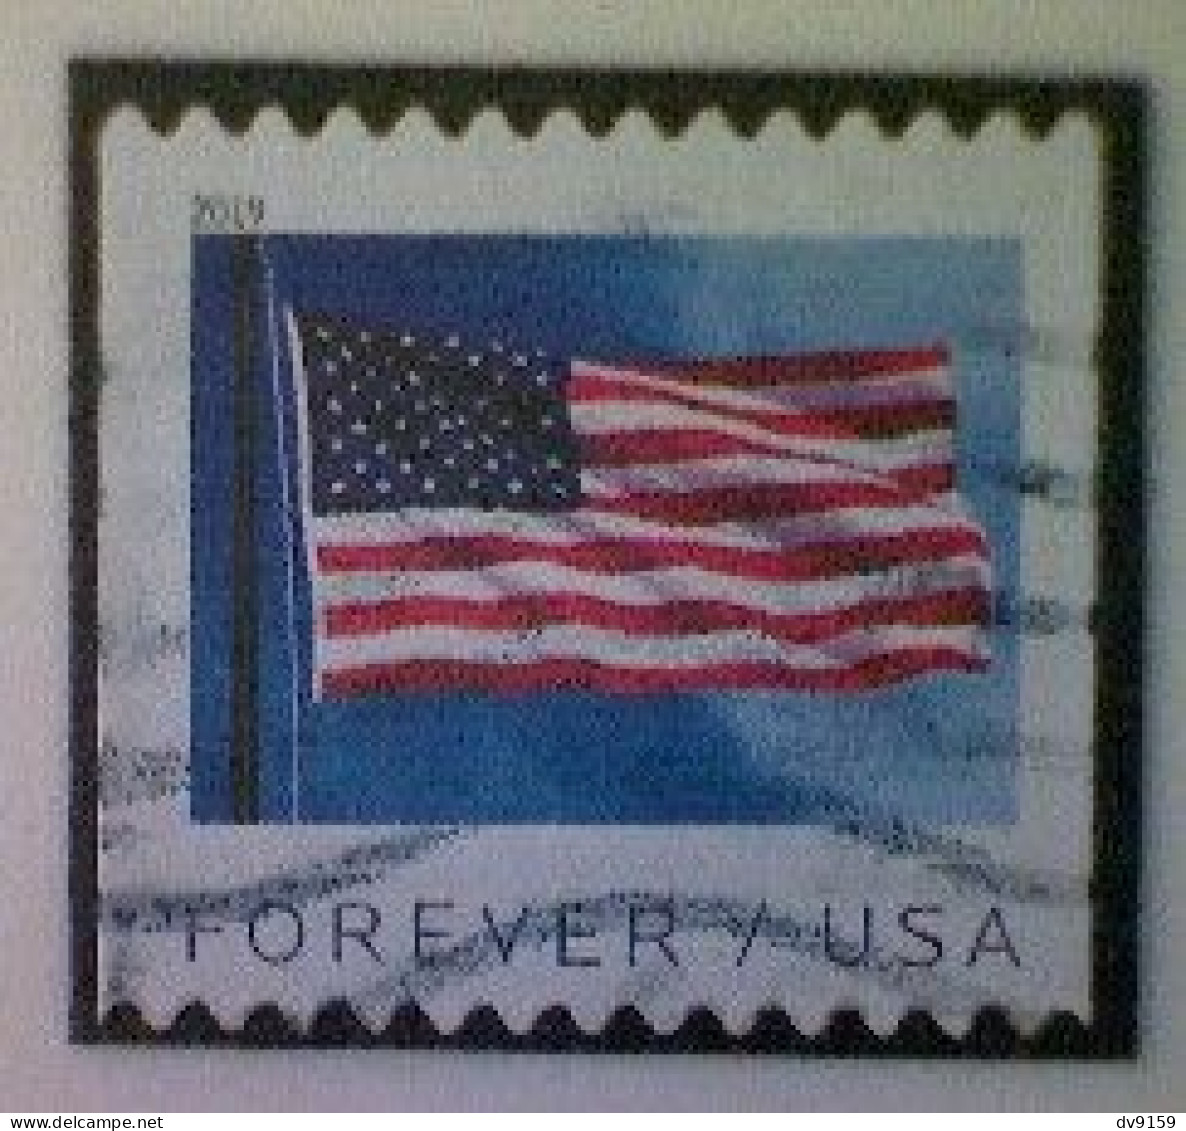 United States, Scott #5343, Used(o) Coil, 2019, Flag Definitive, (55¢) - Gebraucht